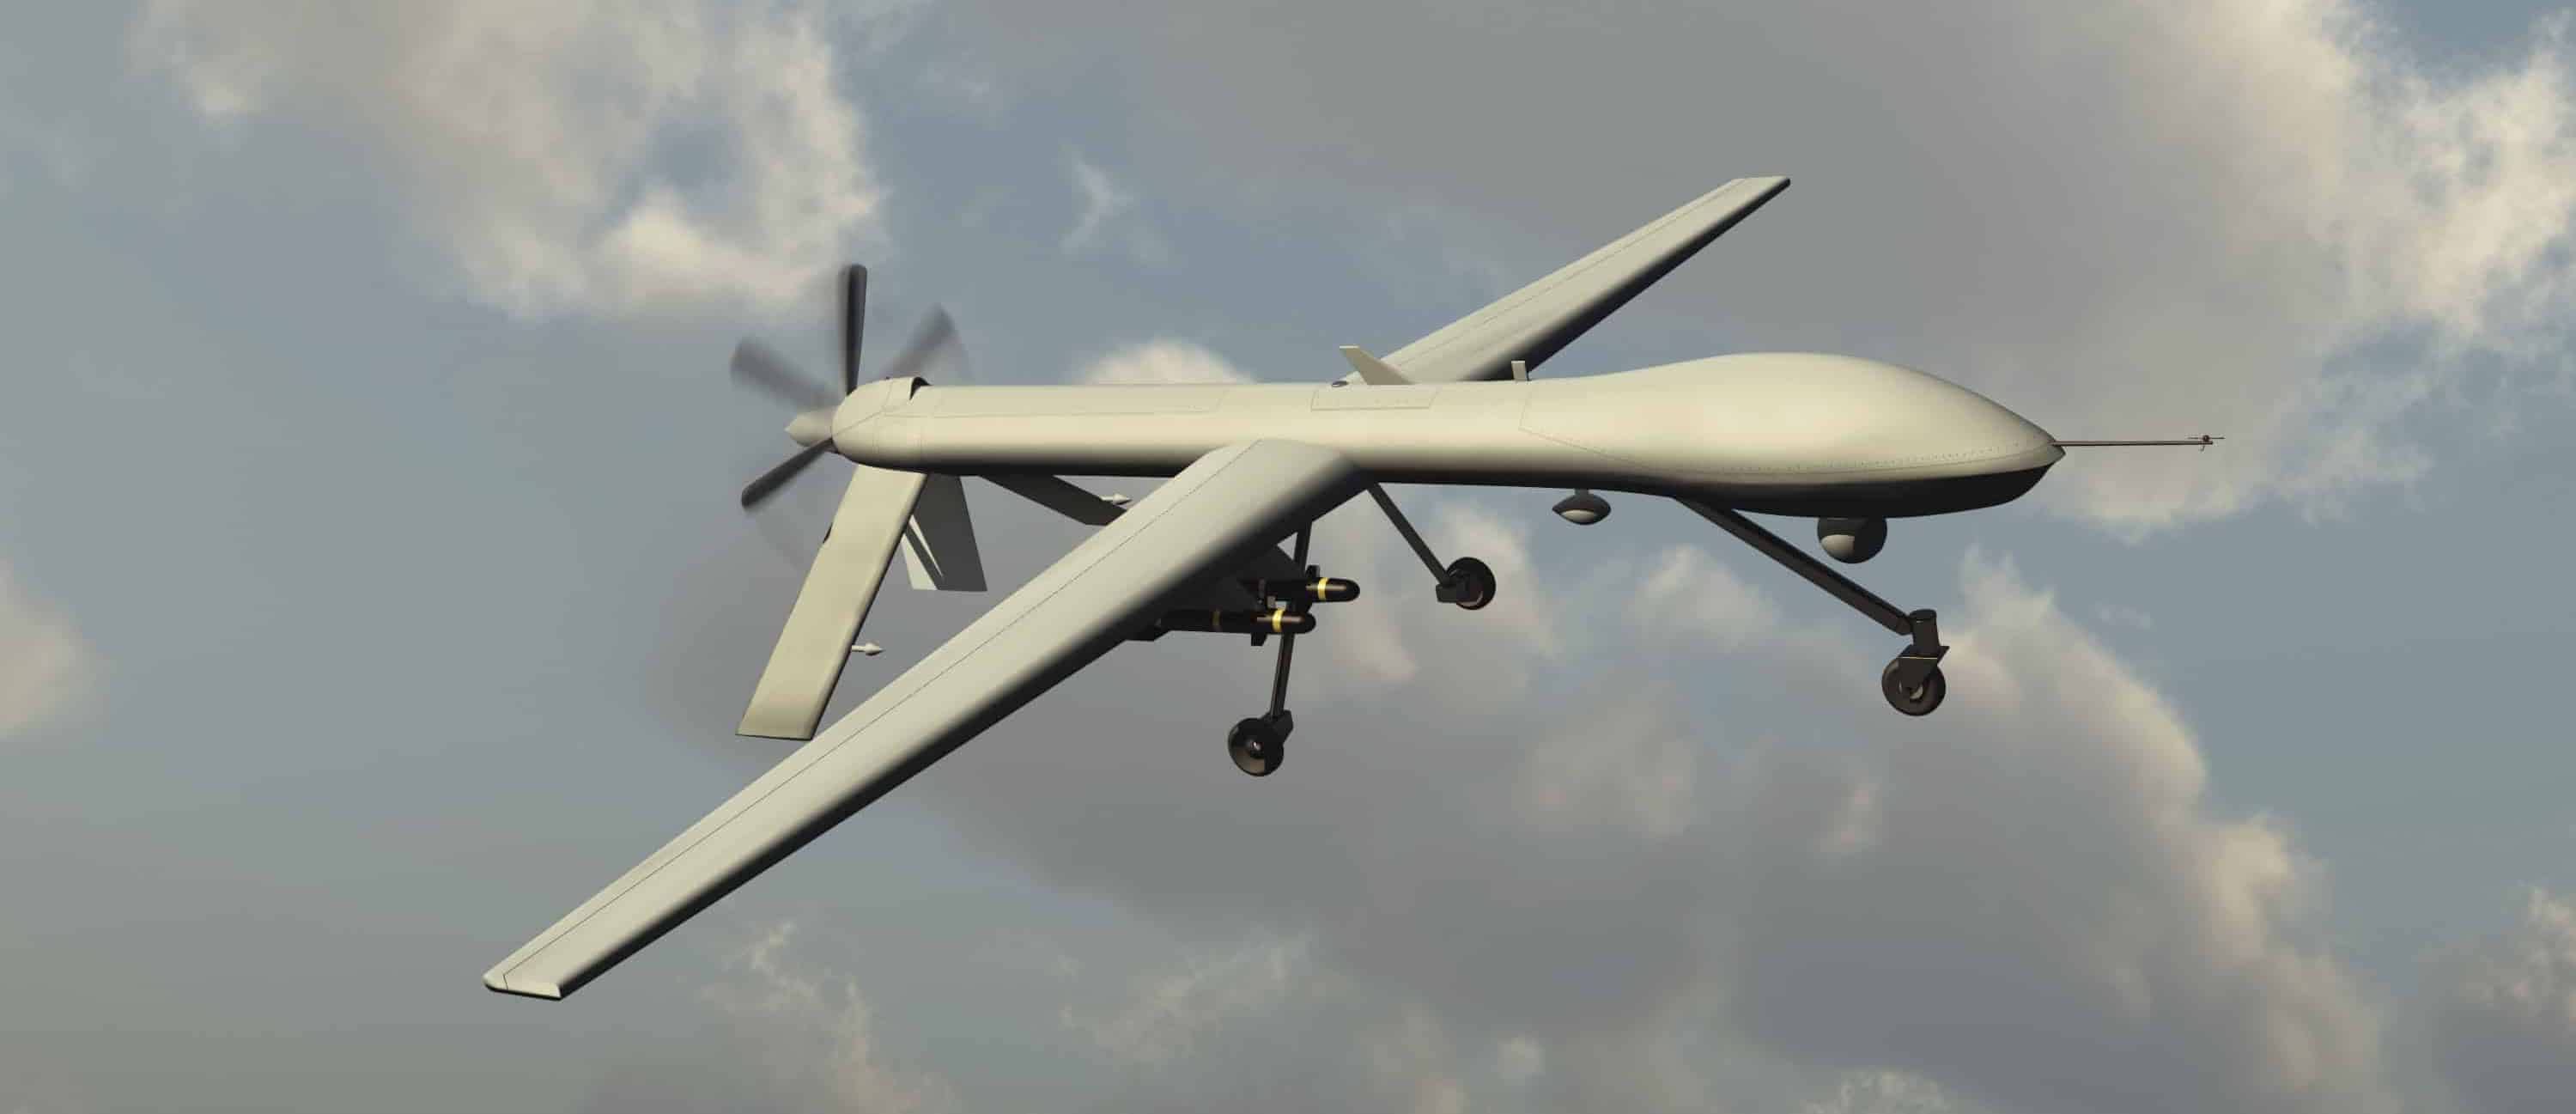 RaimaDMA036-Unmanned_Aircrafts_Military-UAV_Pic2-e1562864891611